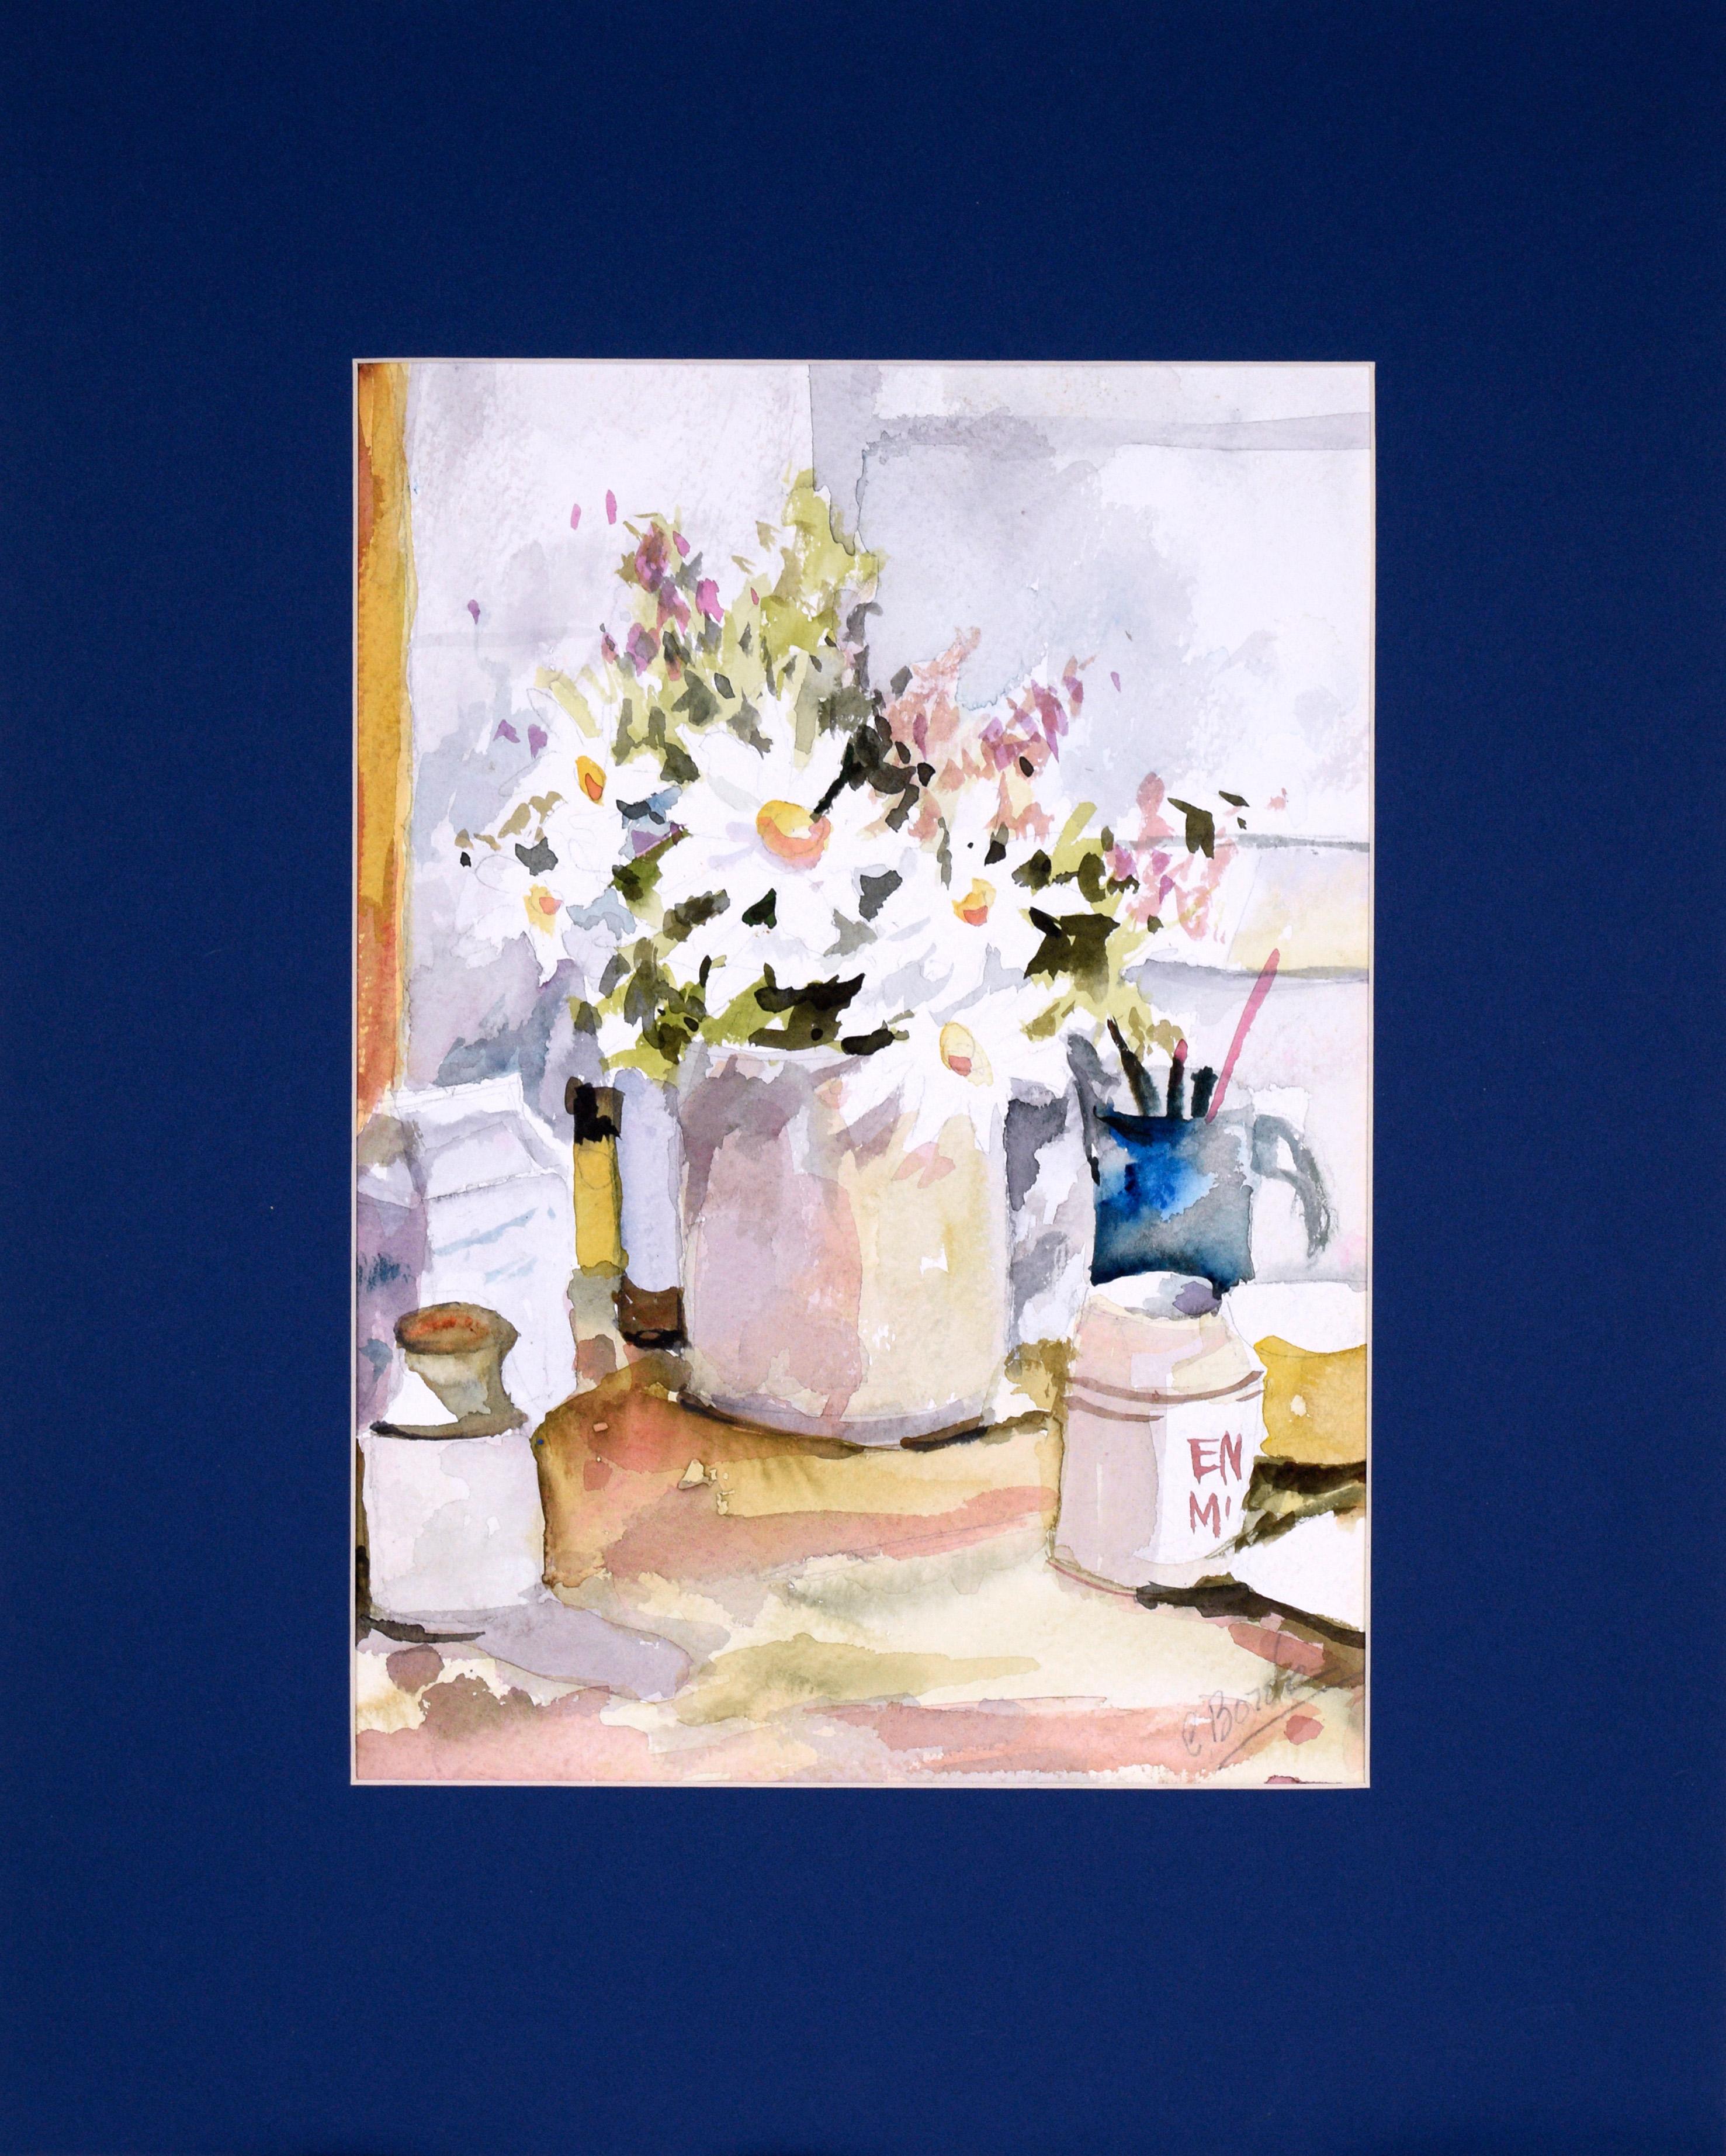 C. Borda Still-Life - "Afternoon Daisies" - Modernist Still Life Original in Watercolor on Paper